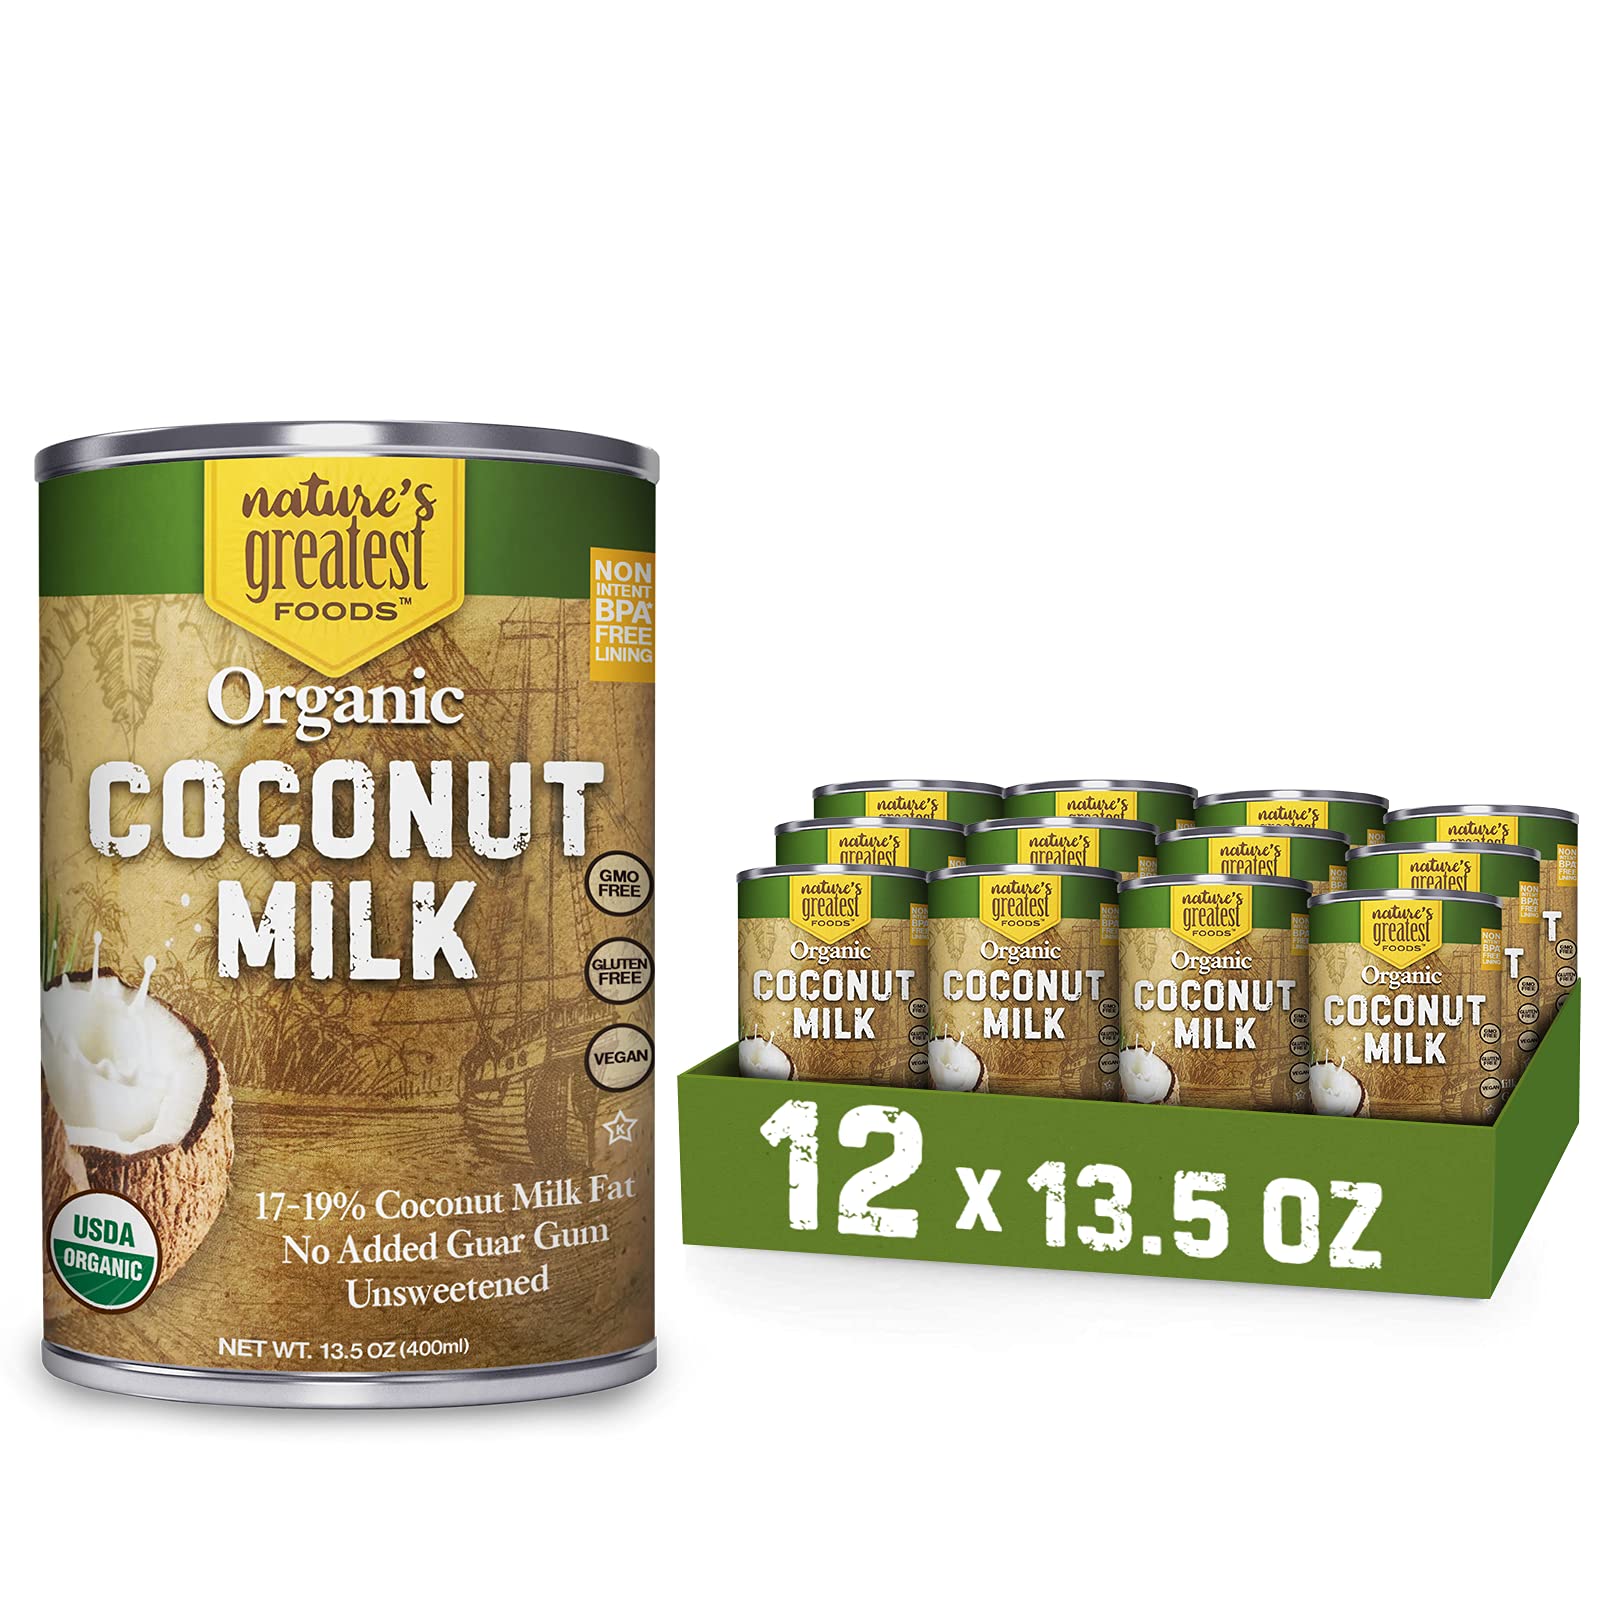 Nature's Greatest Foods Organic Coconut Milk